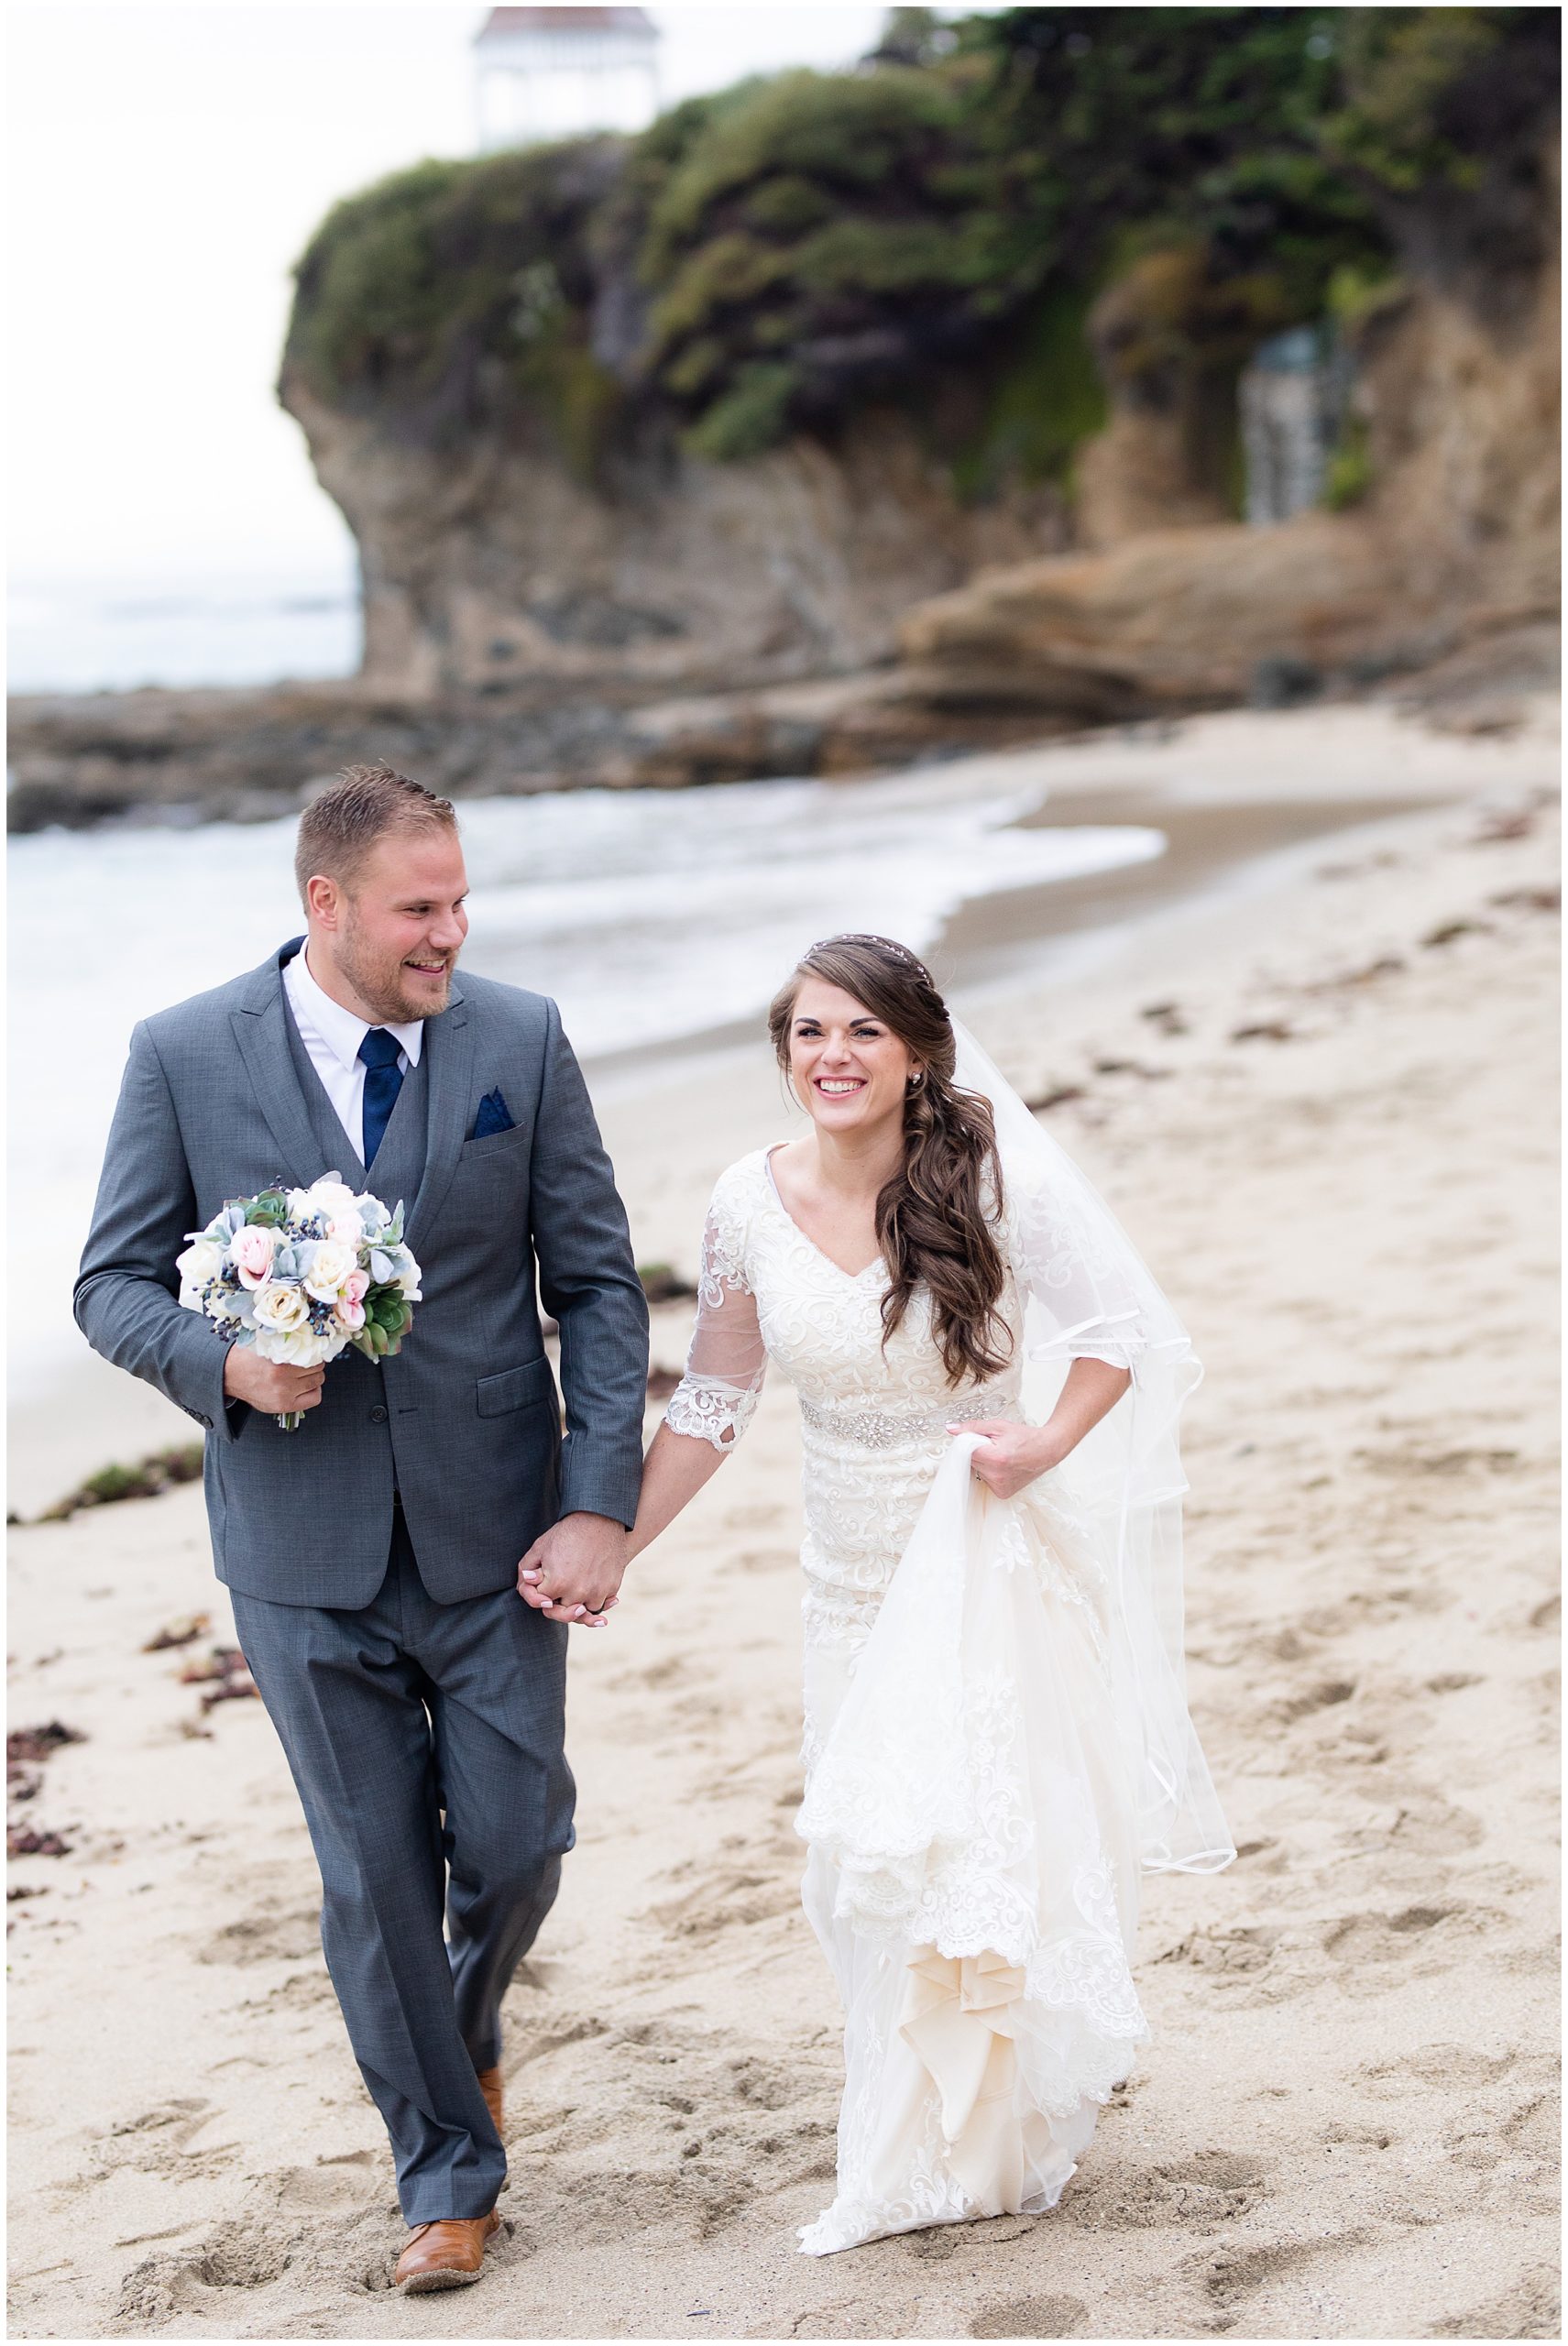 beach bridals natural light bride groom LDS